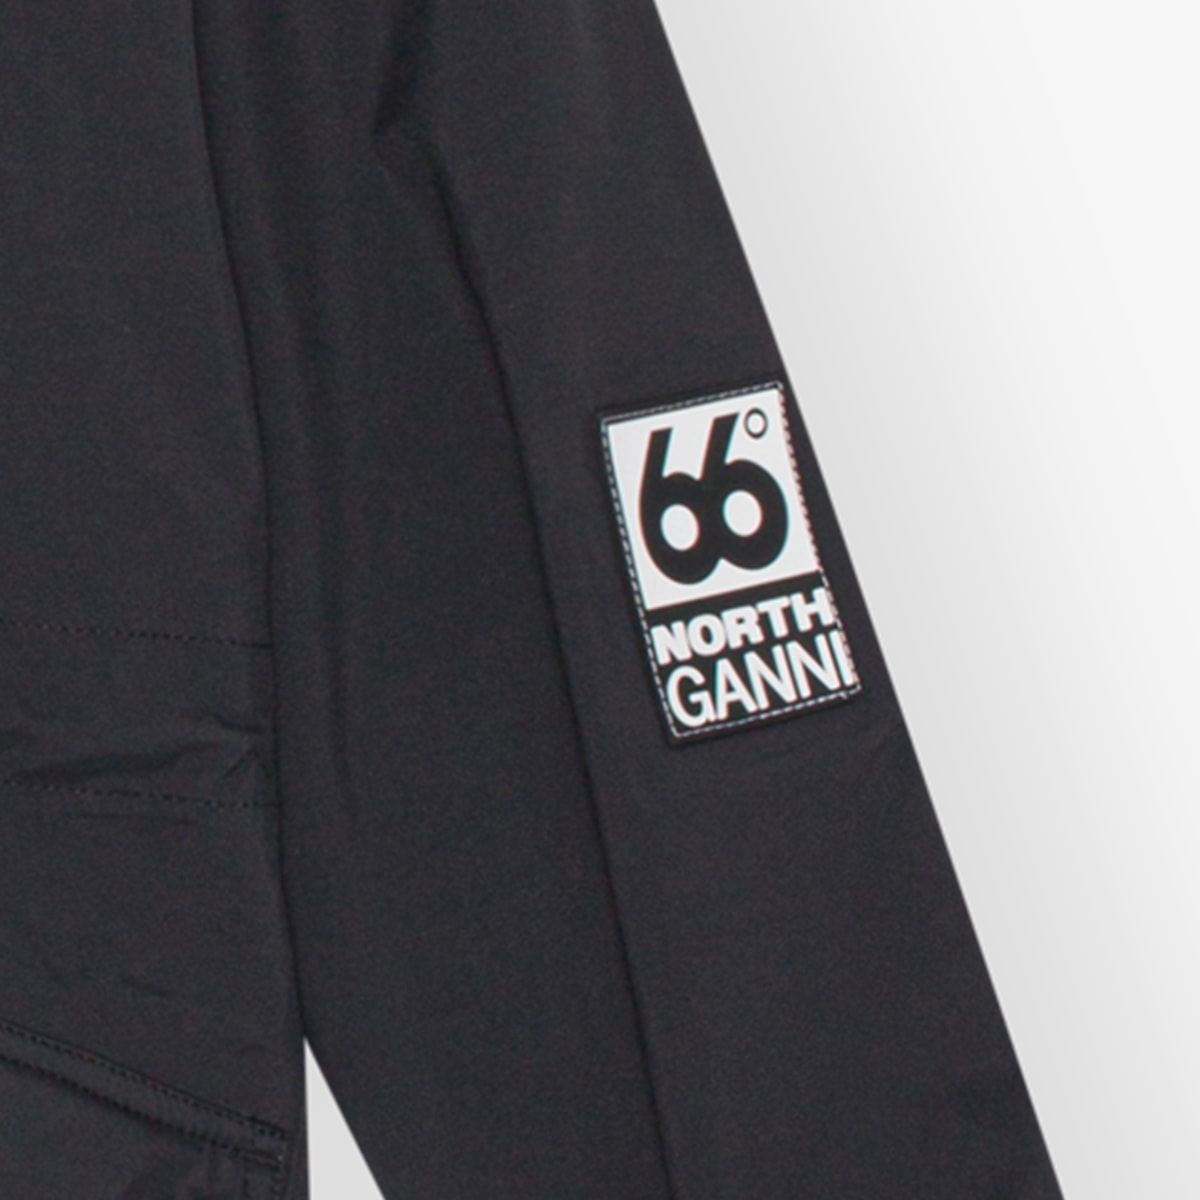 66° North x Ganni Kria Neoshell Jacket (Black) | END. Launches